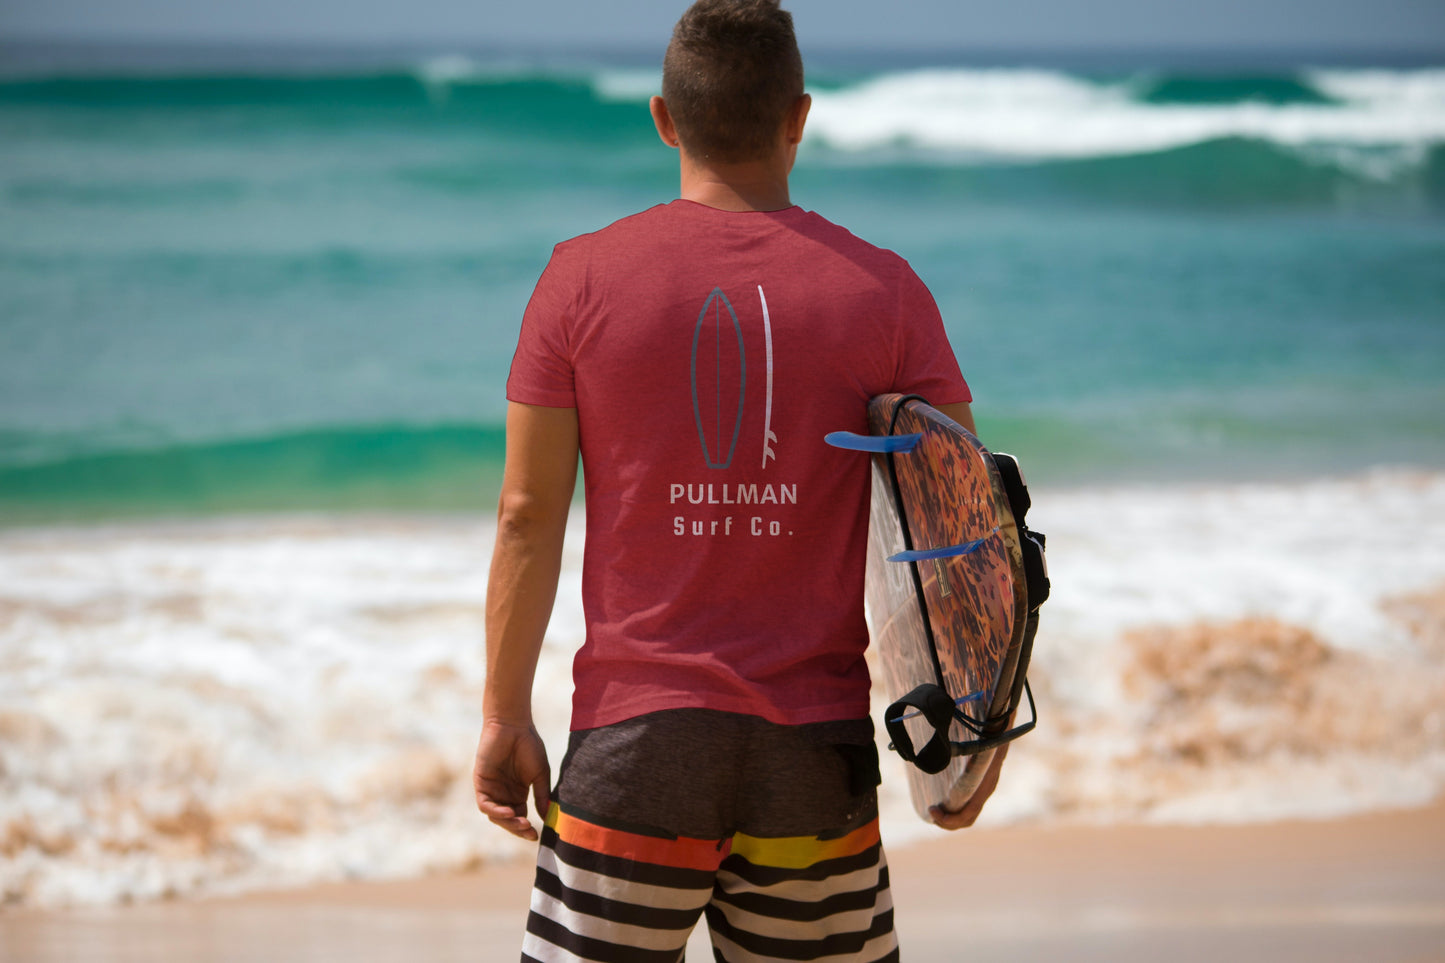 Pullman Surf Co. Red Surfboard Shirt